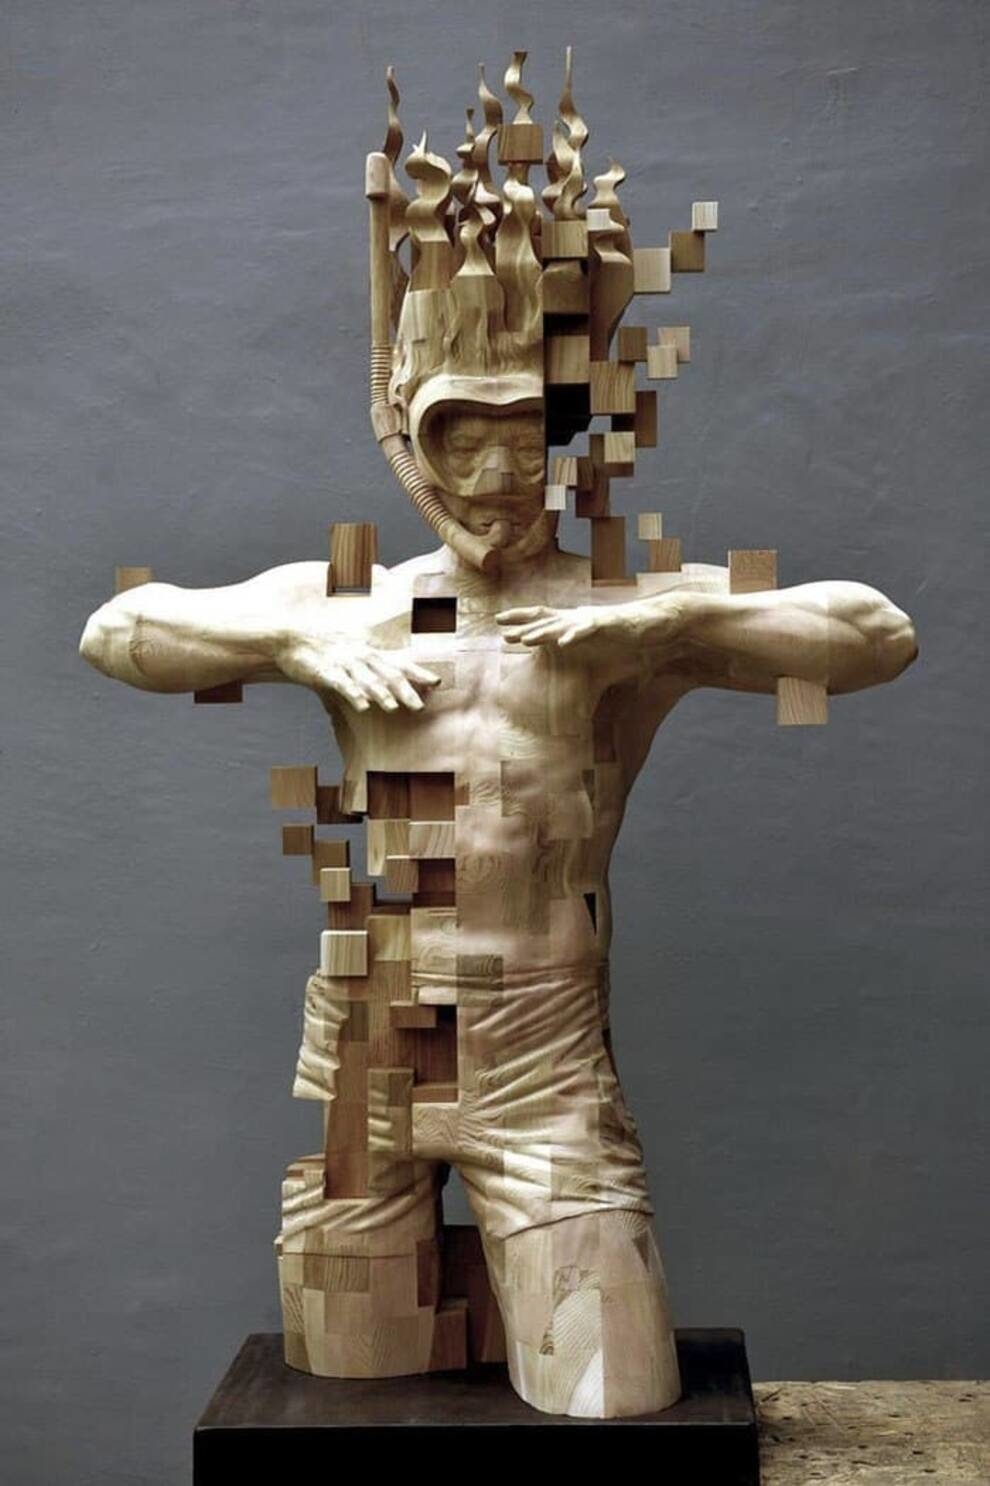 Pixels as Art: Taiwan Wood Carver Uses Unusual Sculpting Technique